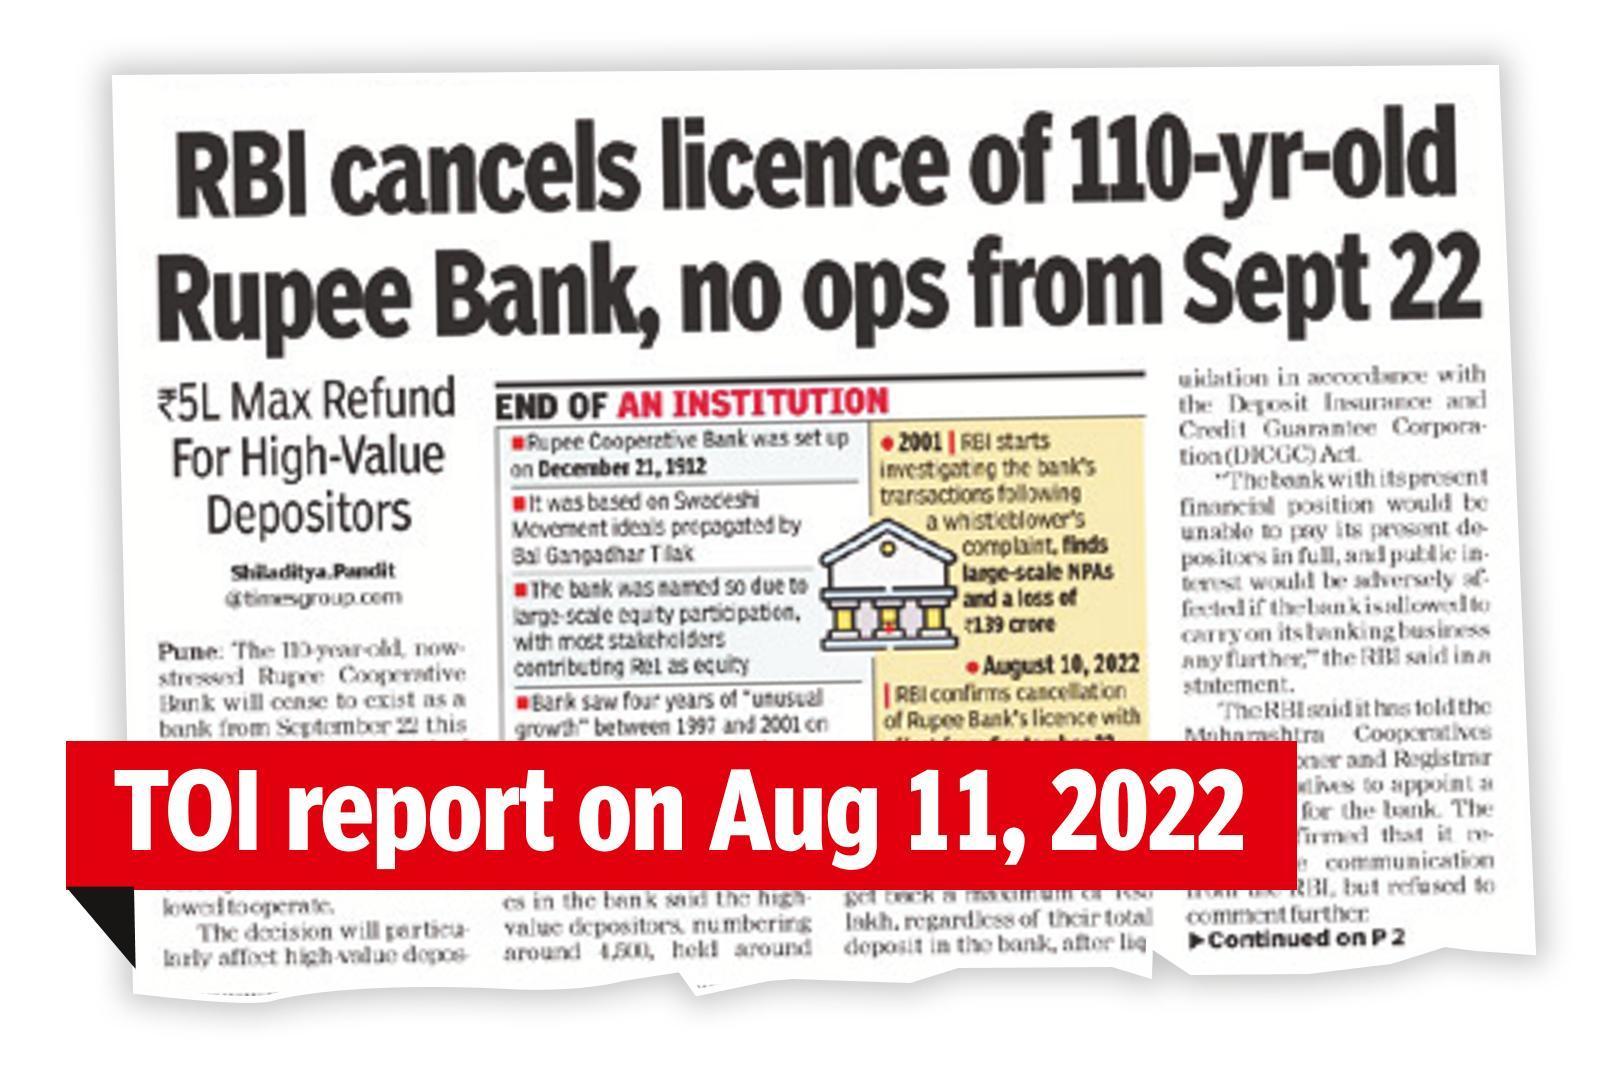 Pune: Rupee Bank administrators to seek legal advice over RBI nix